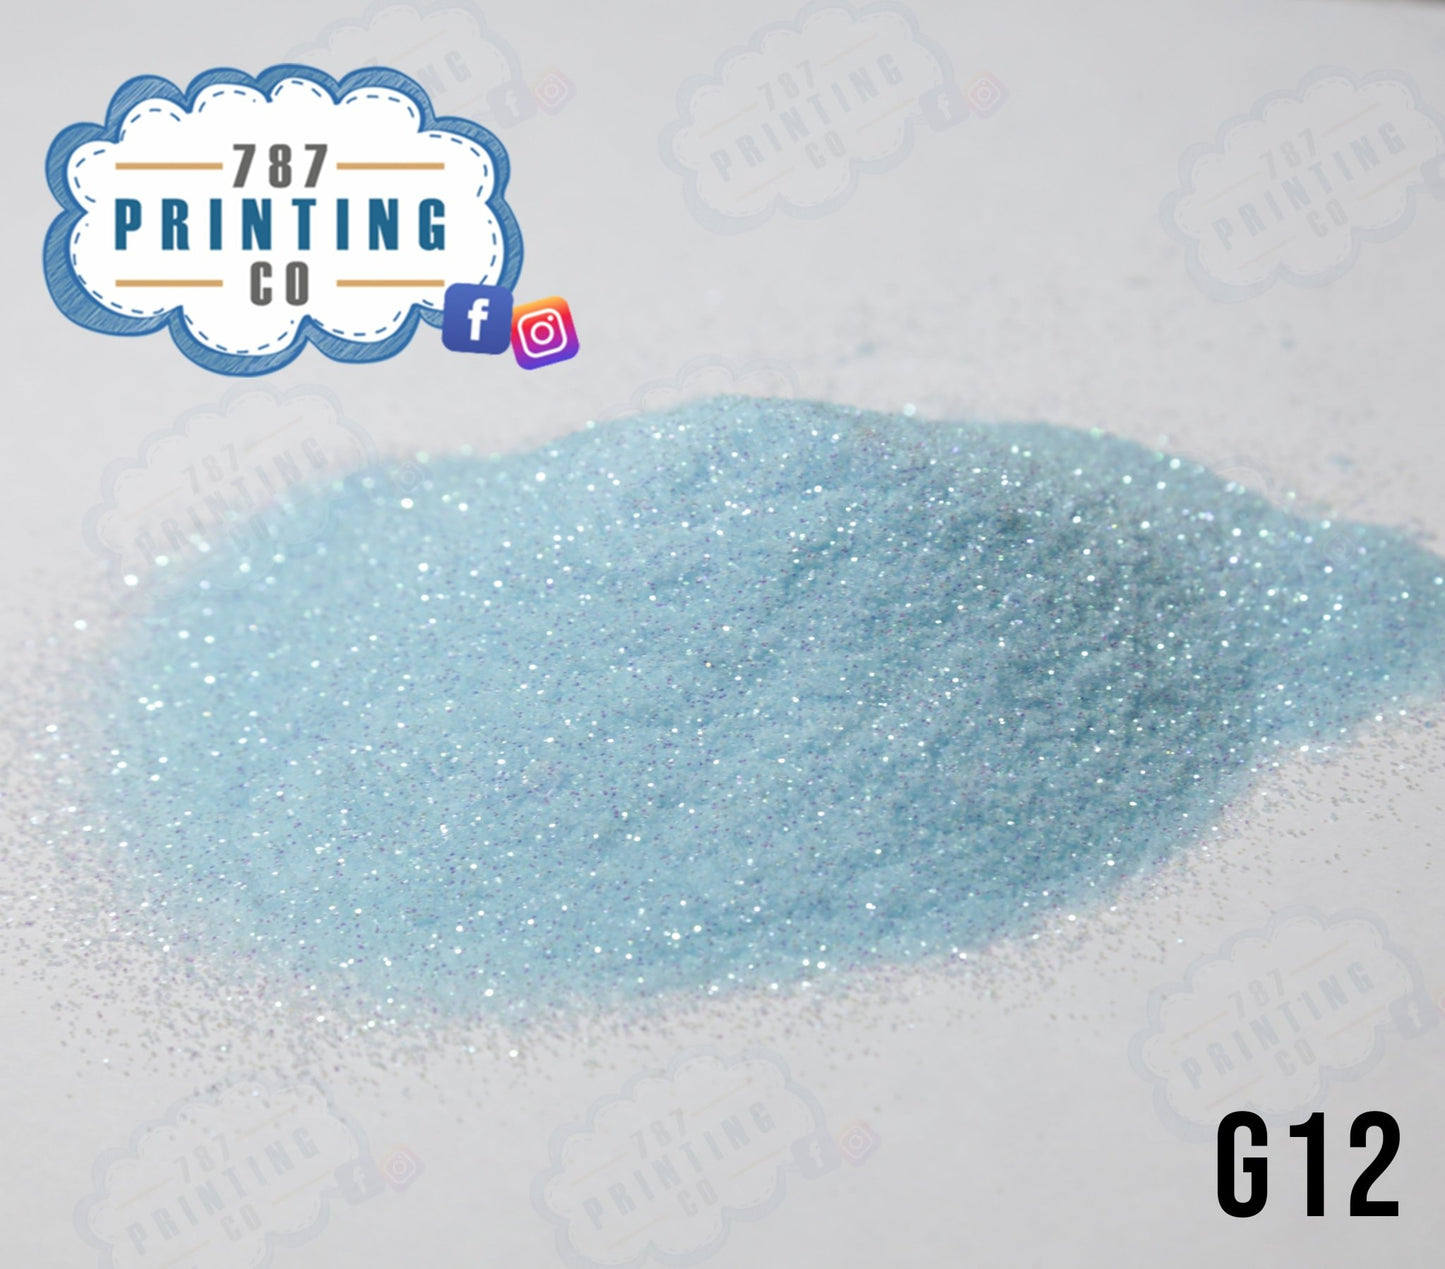 La Parguera Ultra Fine Glitter 1/128 (G12) - 787 Printing Co.